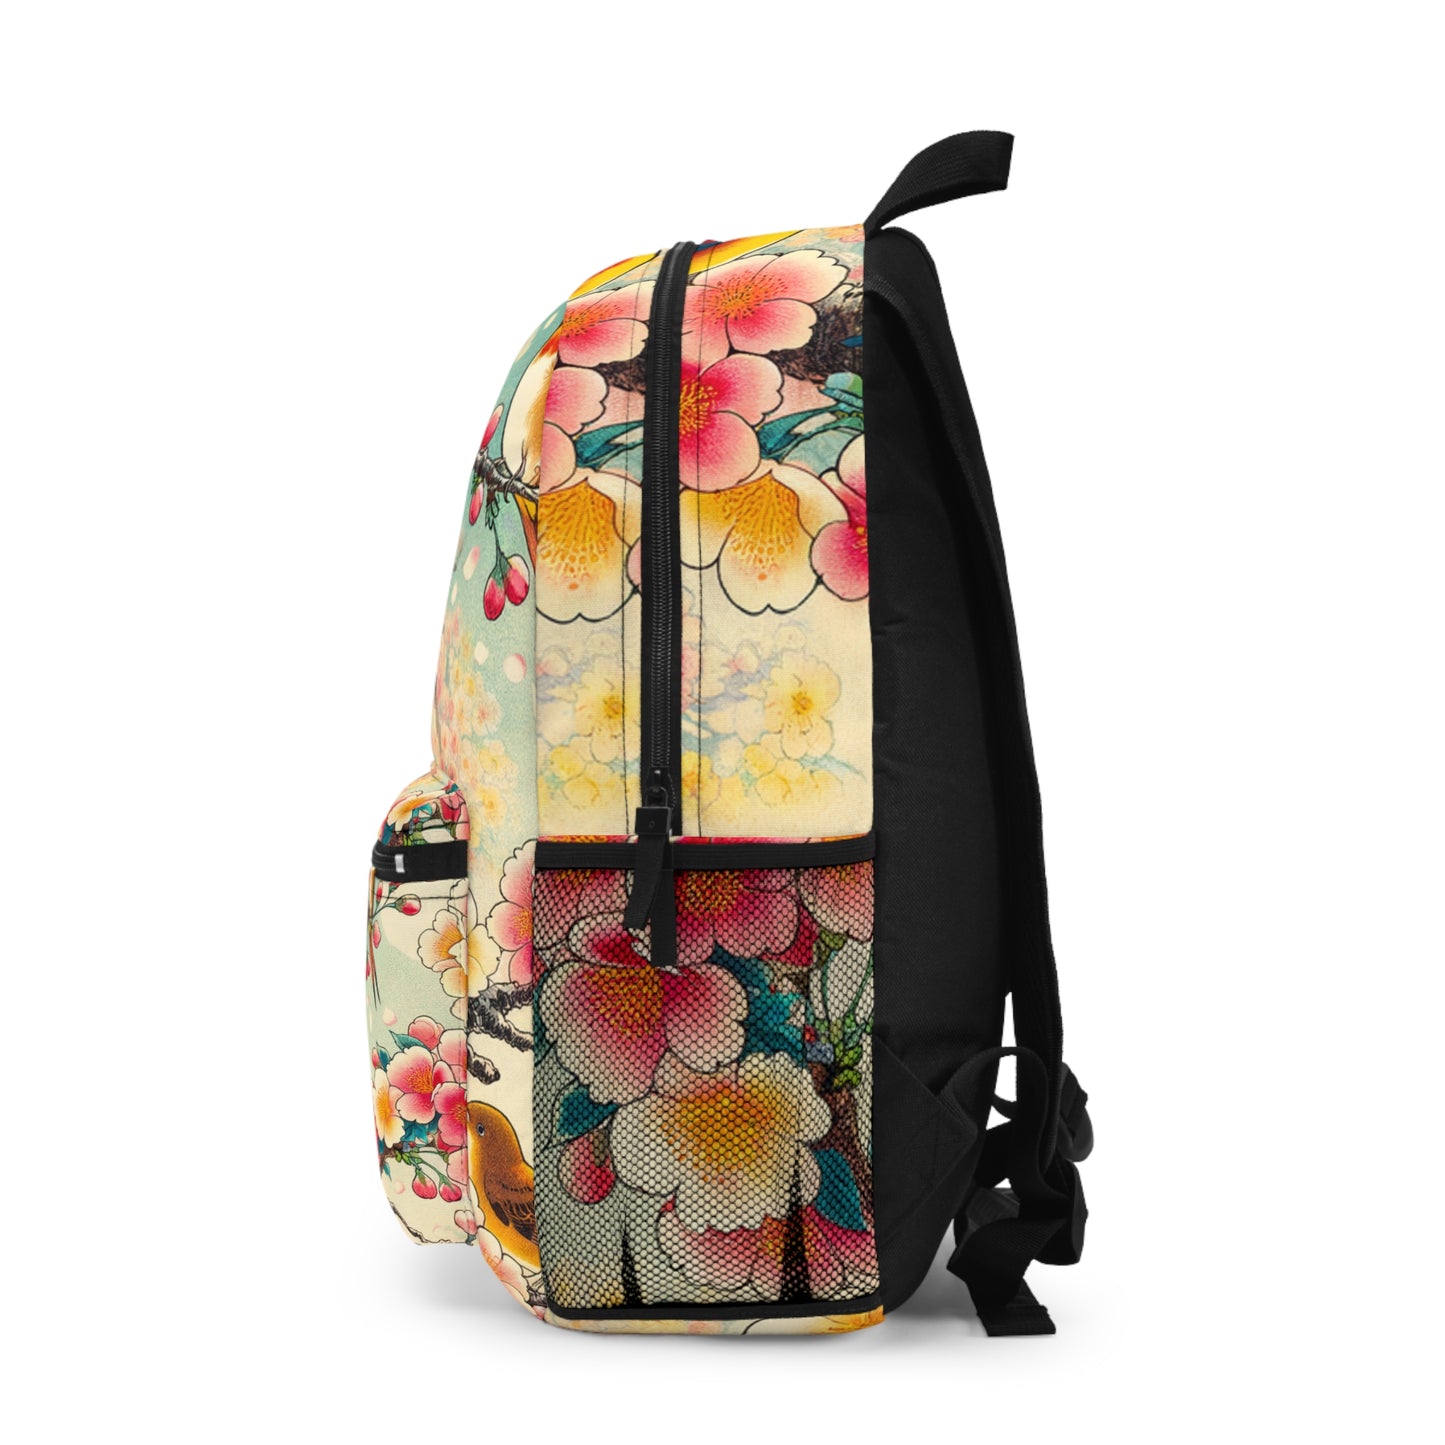 "Verdant Whispers: Sakura Chirping" - Backpack